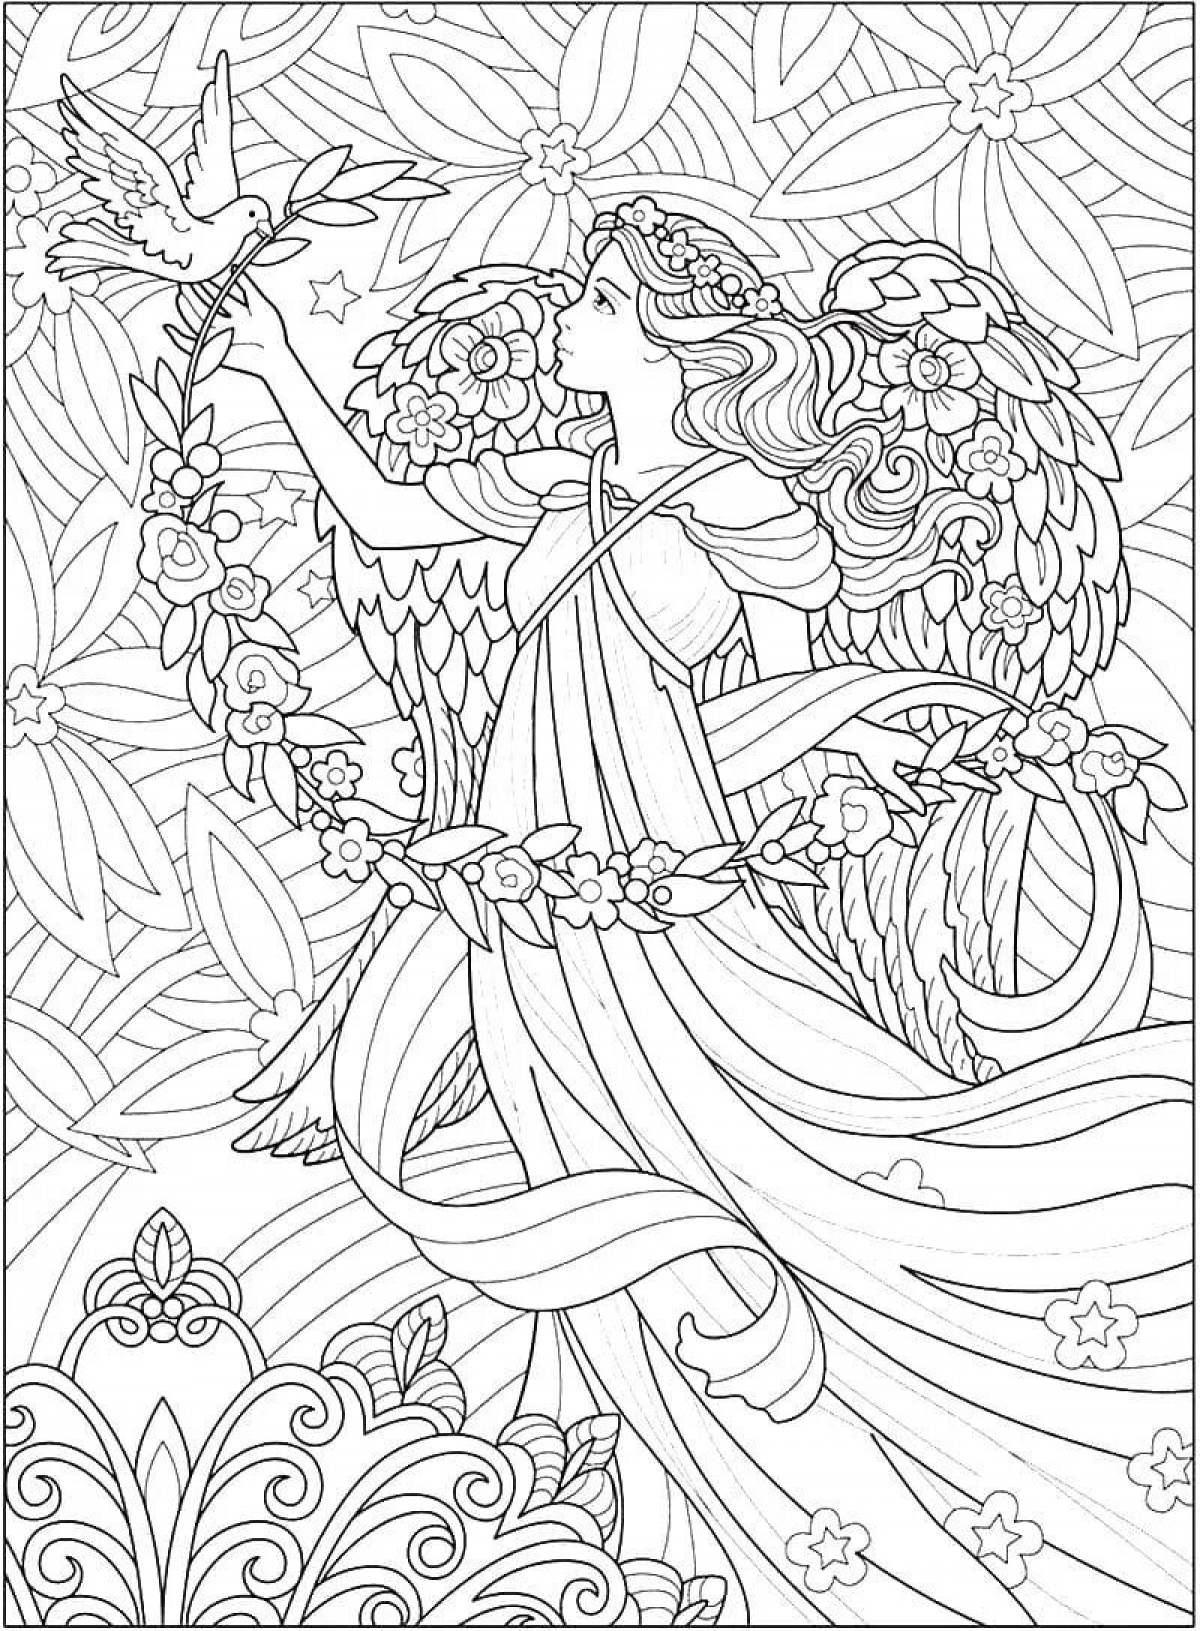 Zen angel antistress coloring book